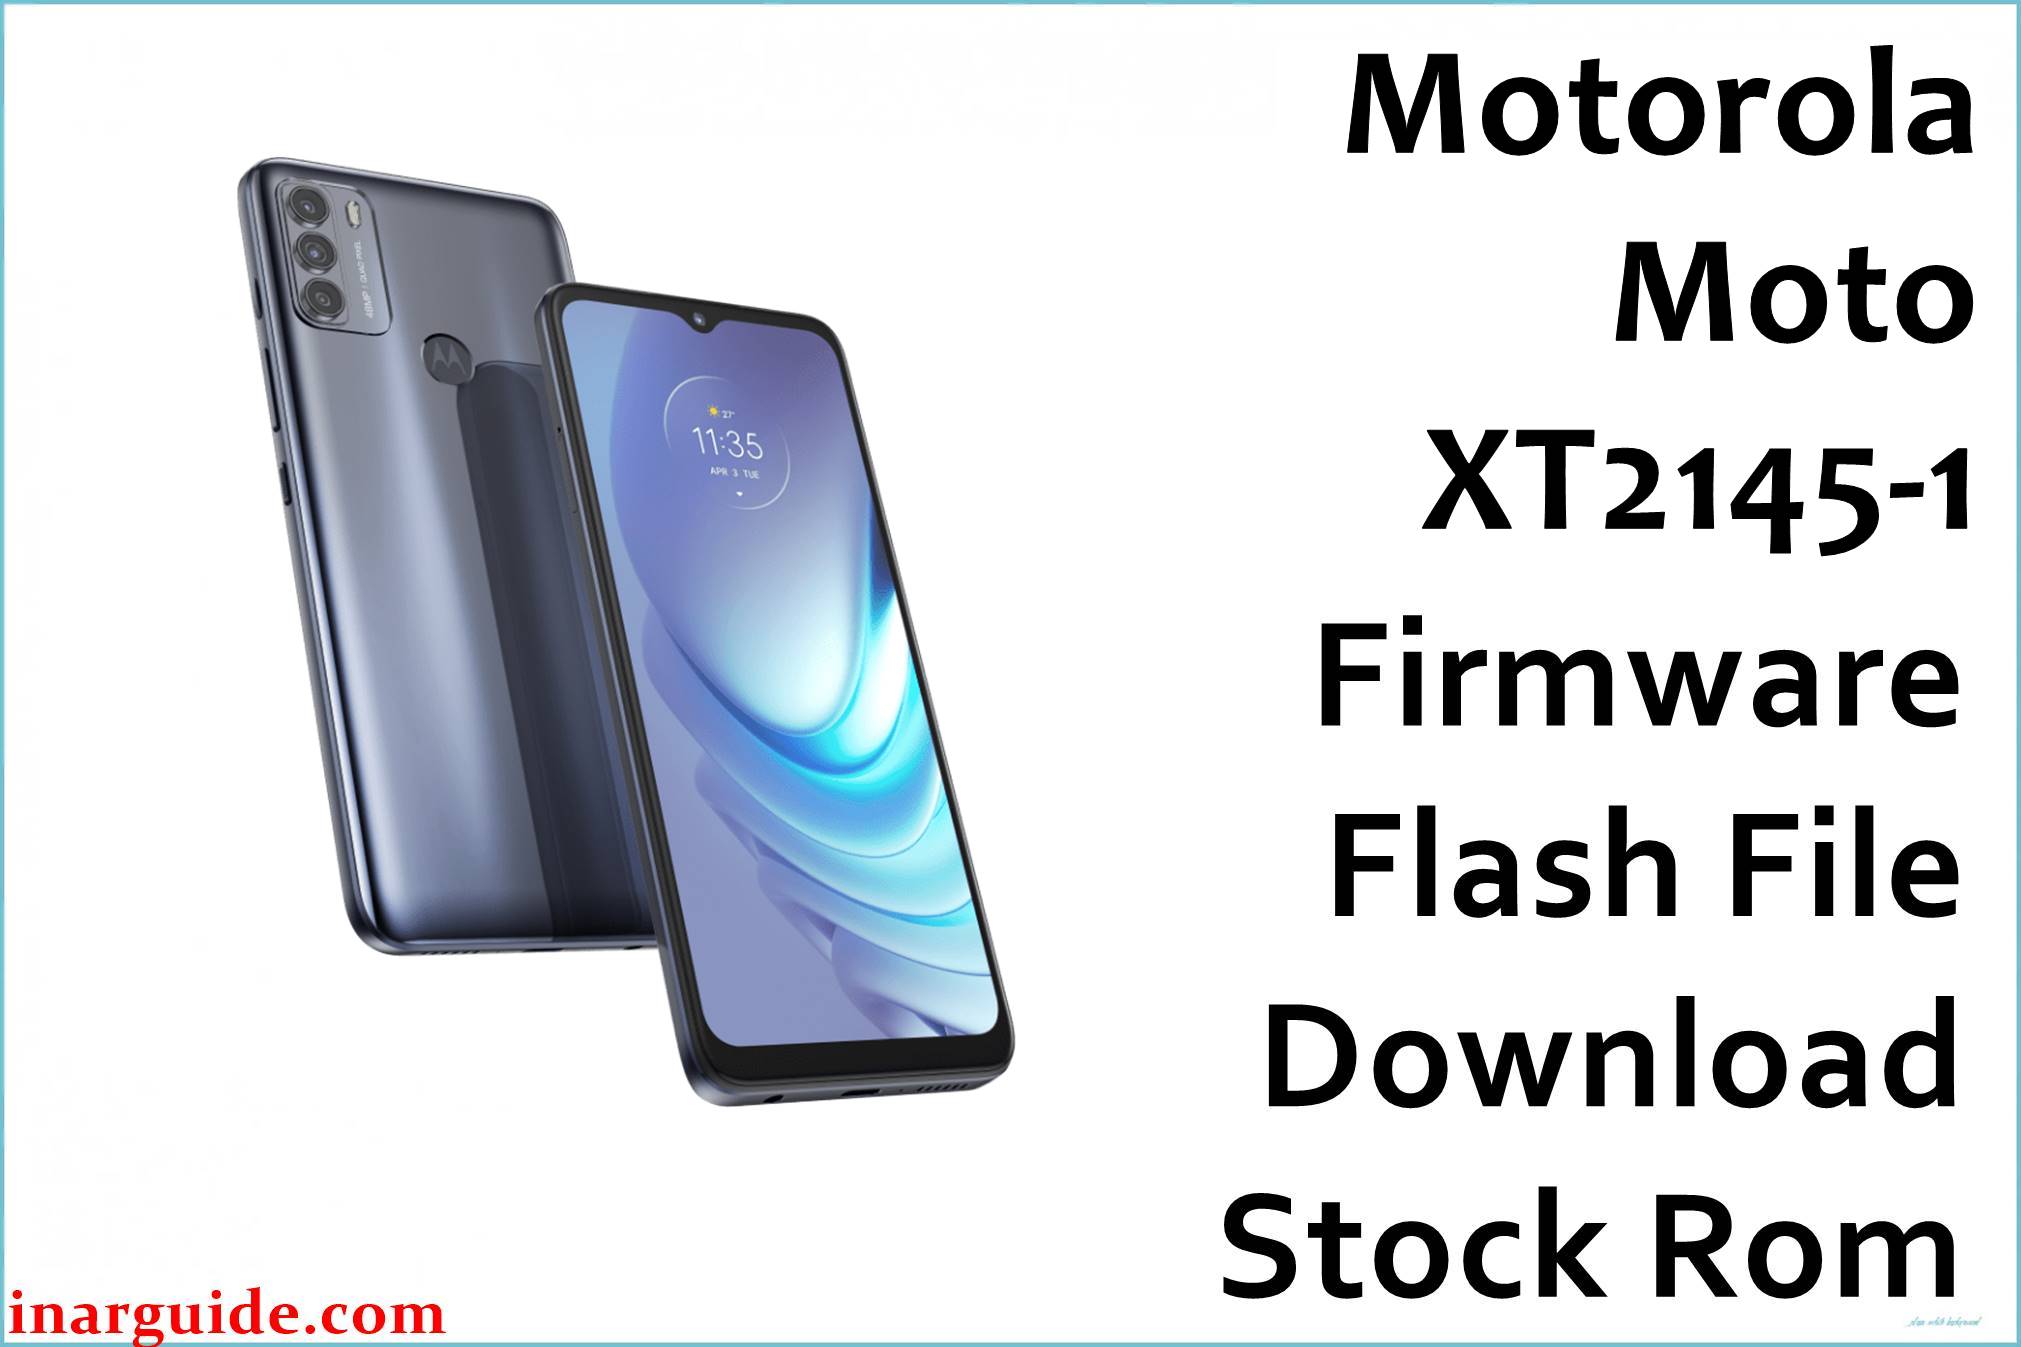 Motorola Moto XT2145-1